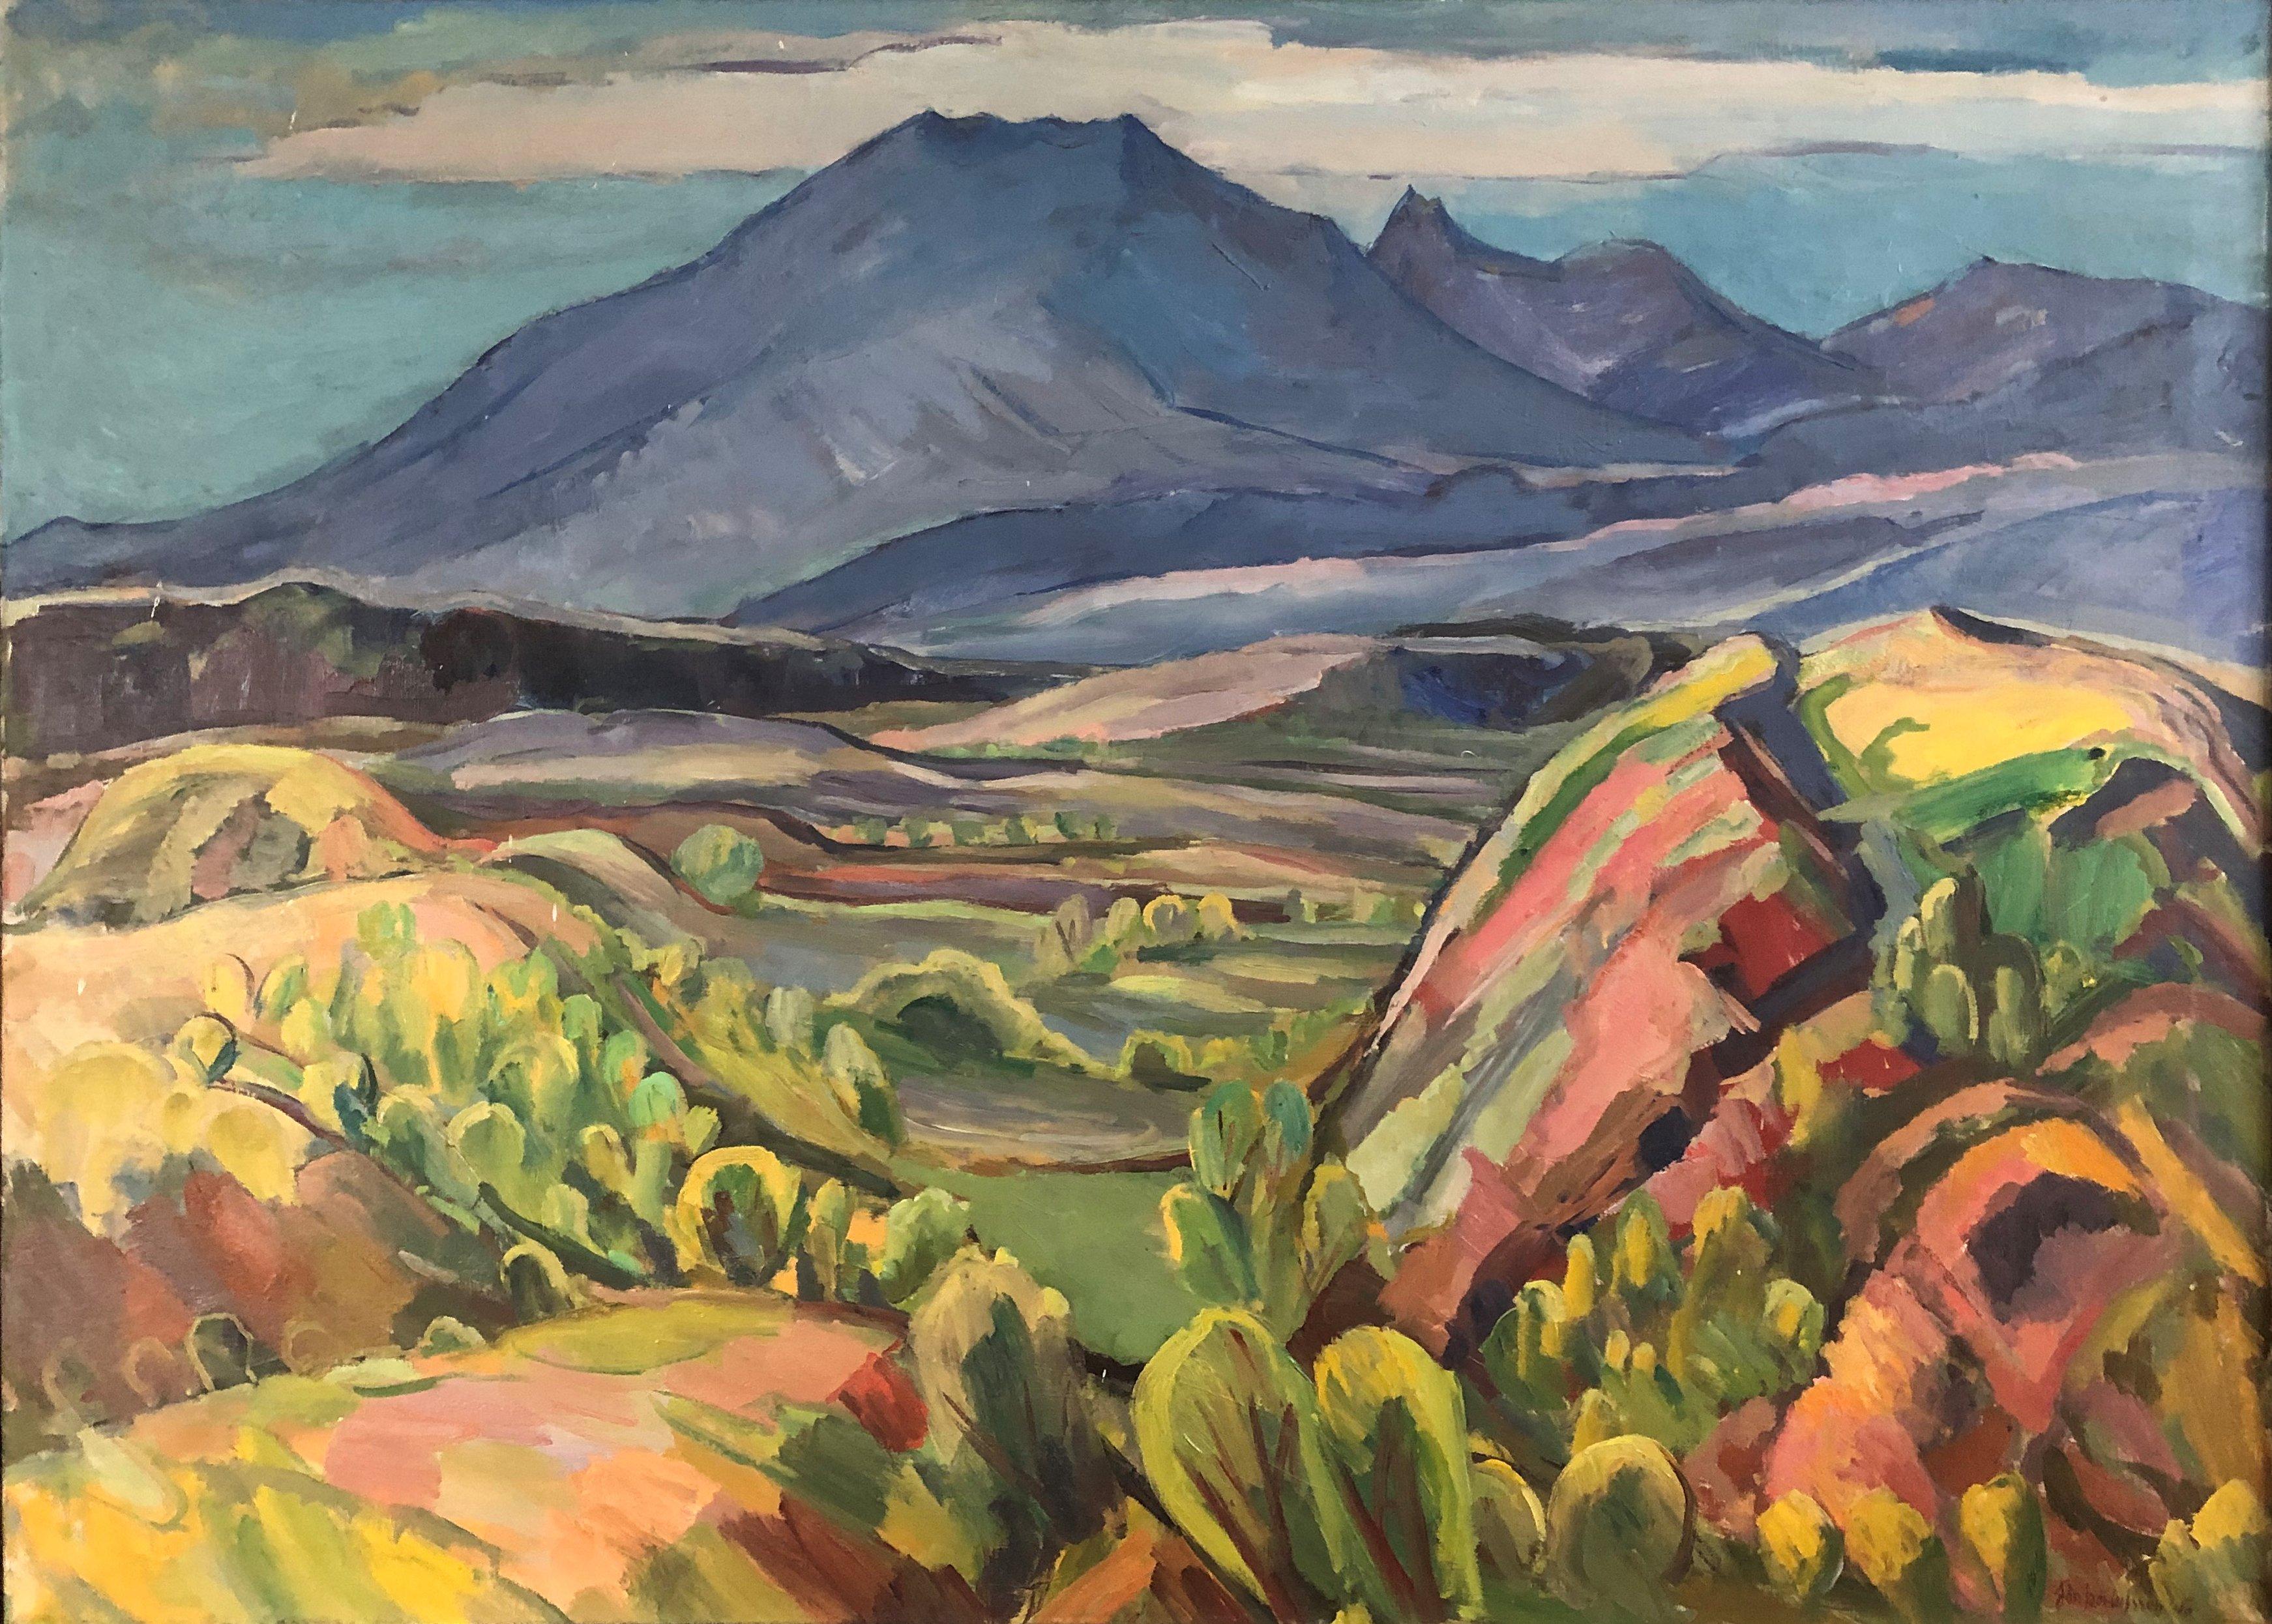 Jon Thorleifsson Landscape Painting - "Icelandic Mountain Landscape, " Modernist Post-Impressionist Cubist Fauvist View